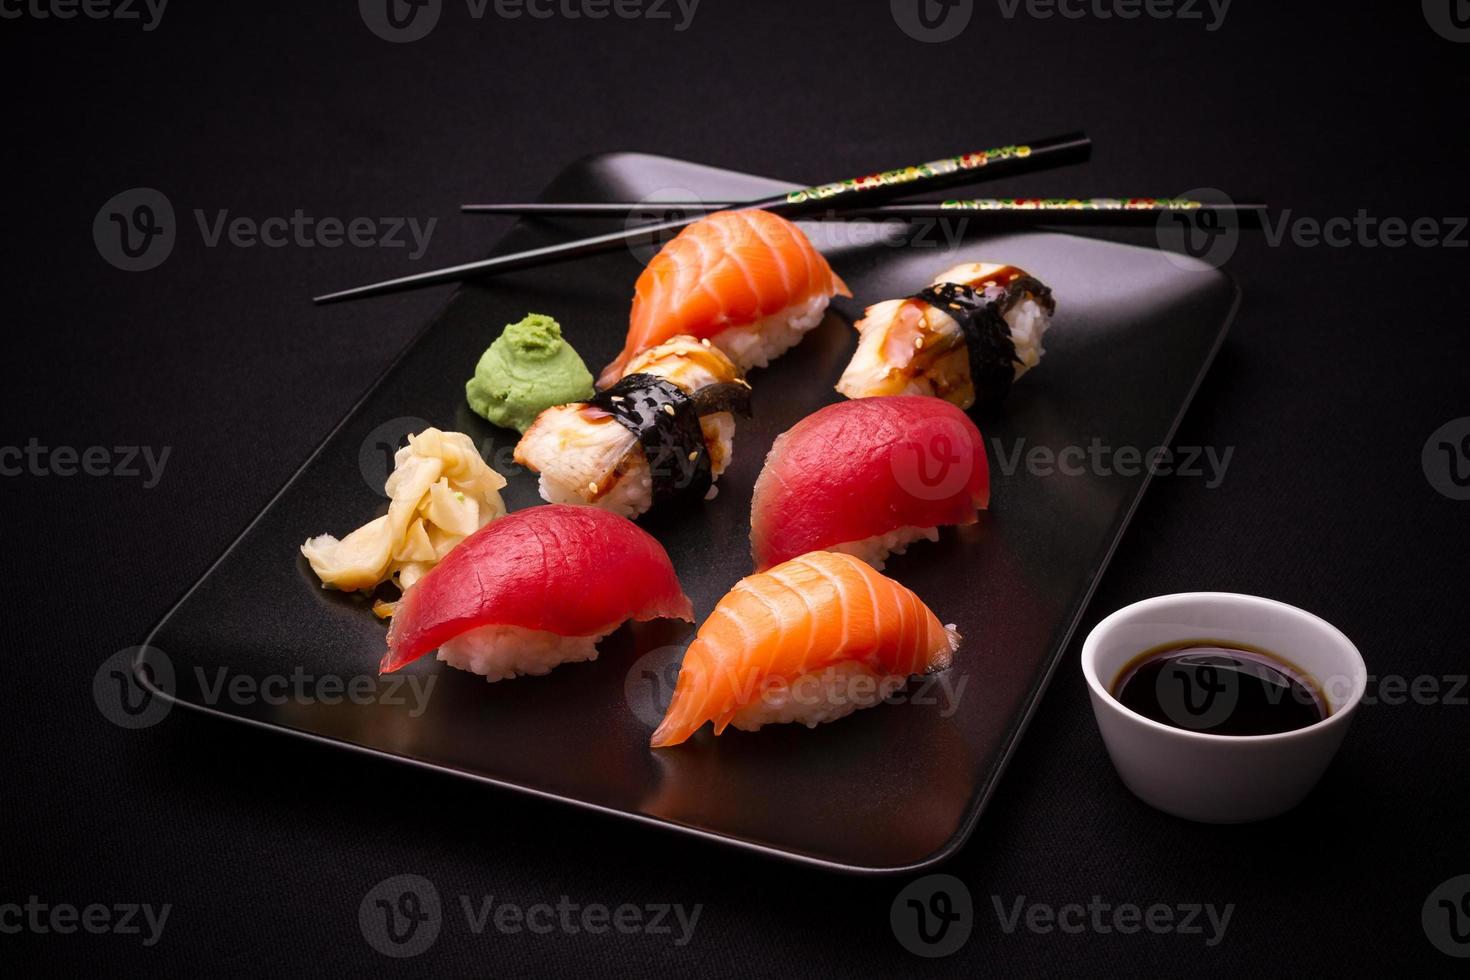 paling, zalm en tonijn sushi met stokjes foto